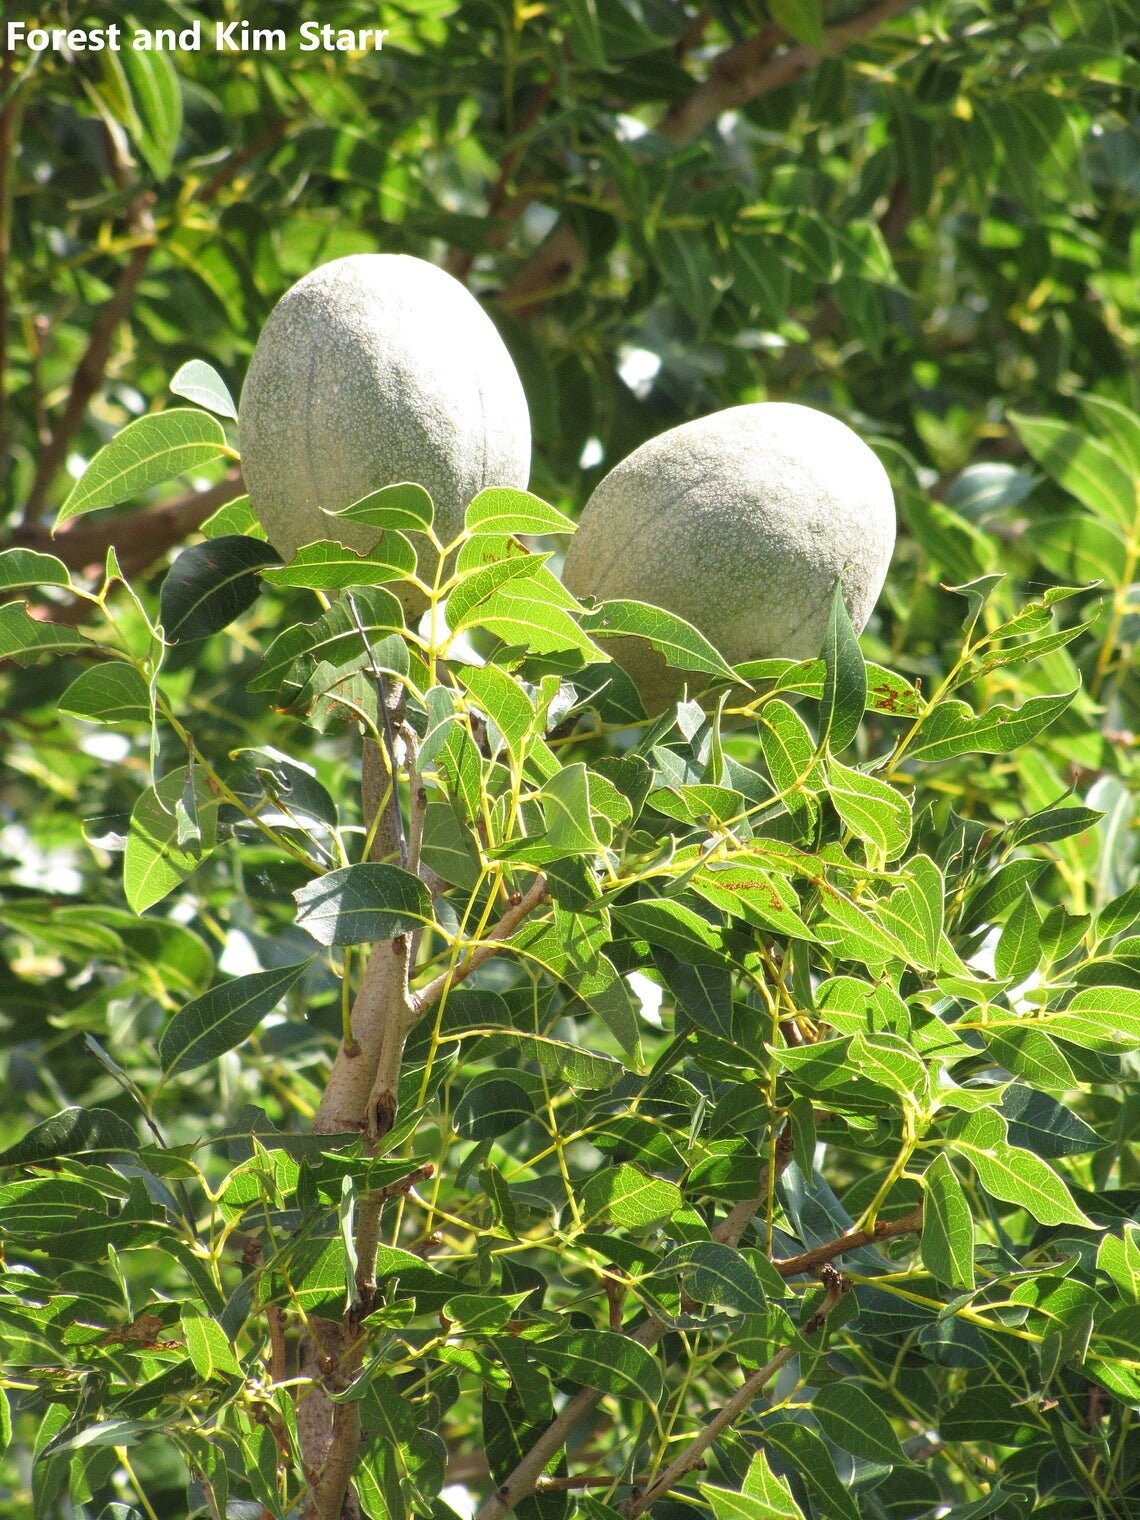 Swietenia Mahagoni - American Mahogany Wood - West Indian Mahogany- 5 Seeds